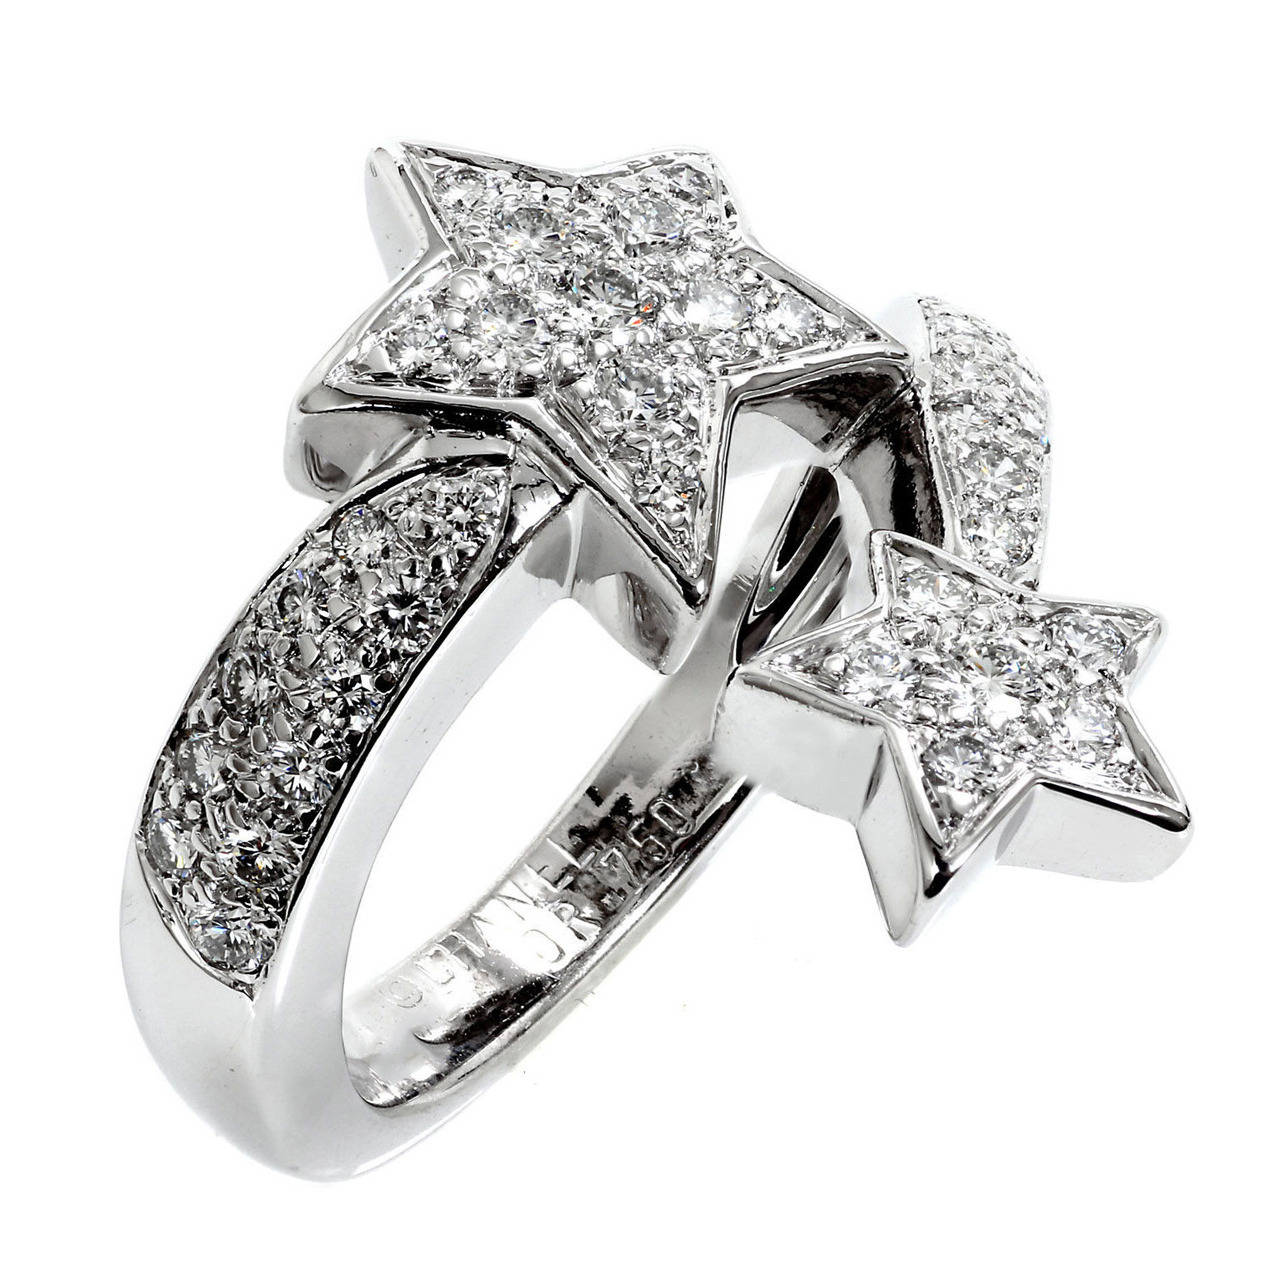 Chanel Comete Diamond Ring in White Gold | Shoplinkz